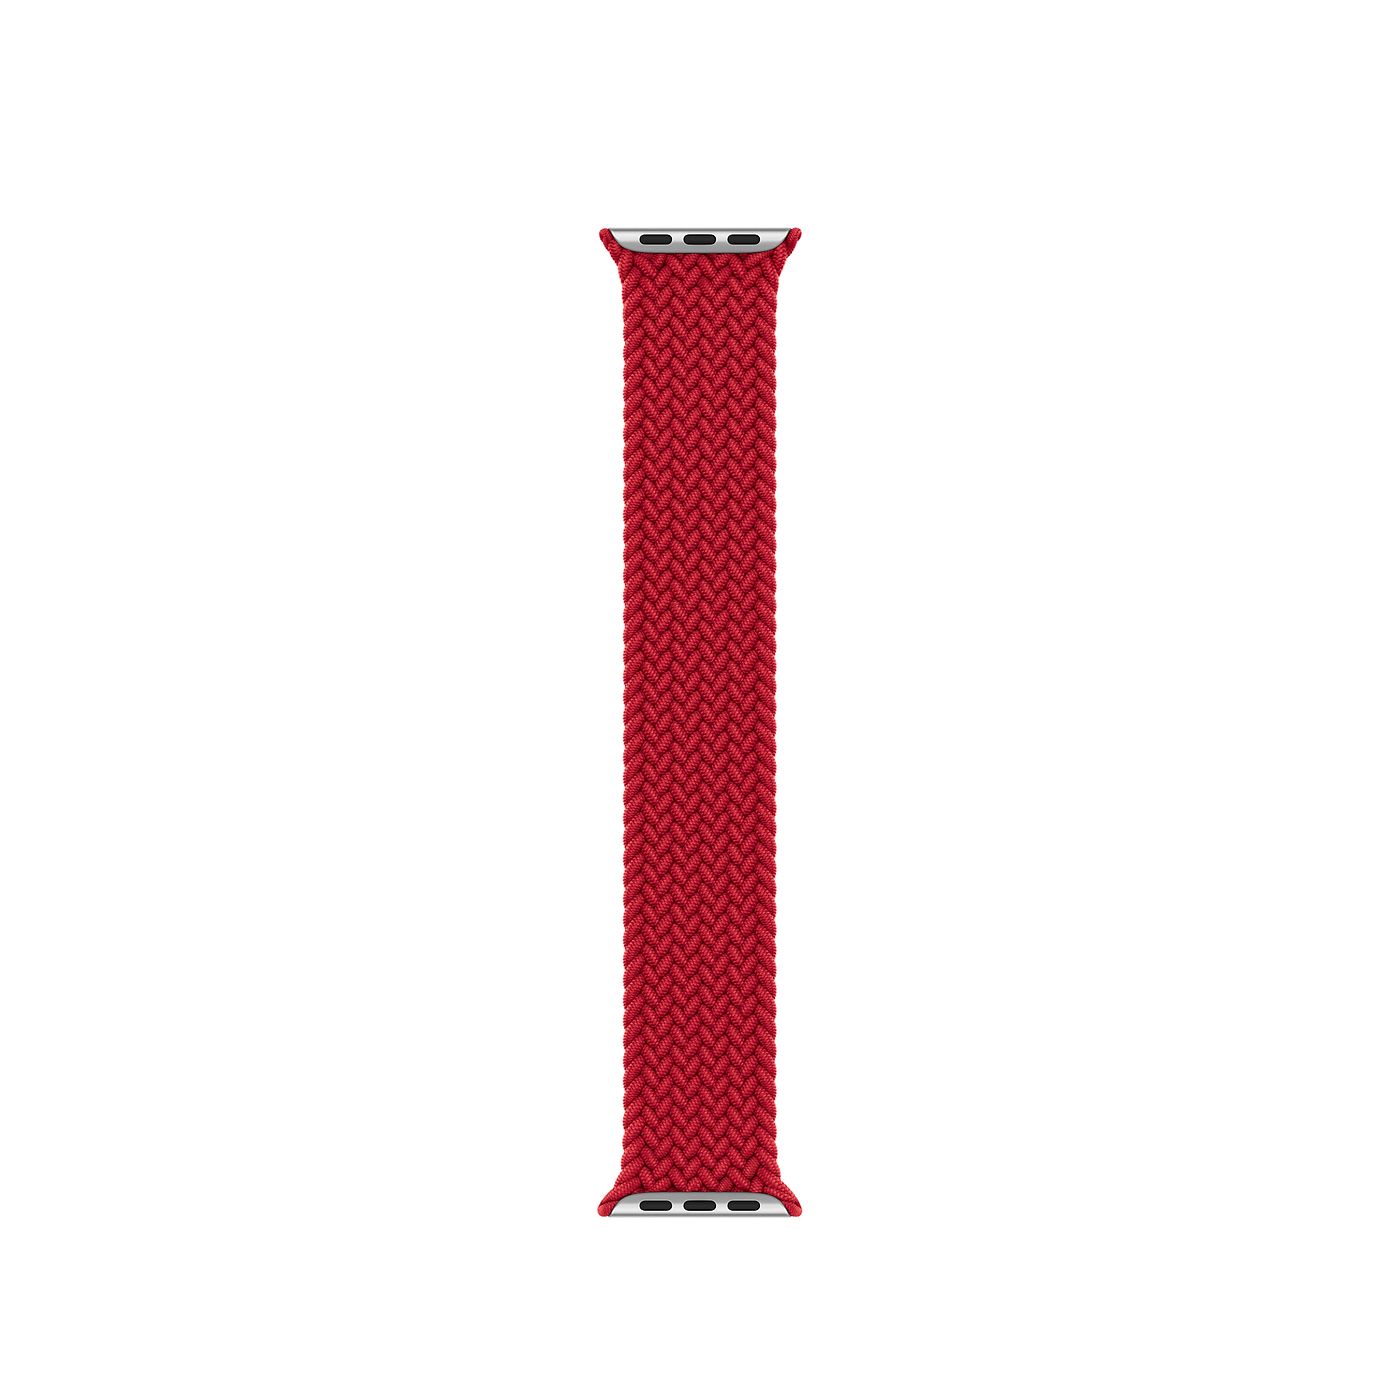 Original Nylon Braided Solo Loop strap For Apple watch Band iWatch series 6 5 4 3 2 1 SE Elastic belt bracelet 44mm 40mm 38mm 42mm